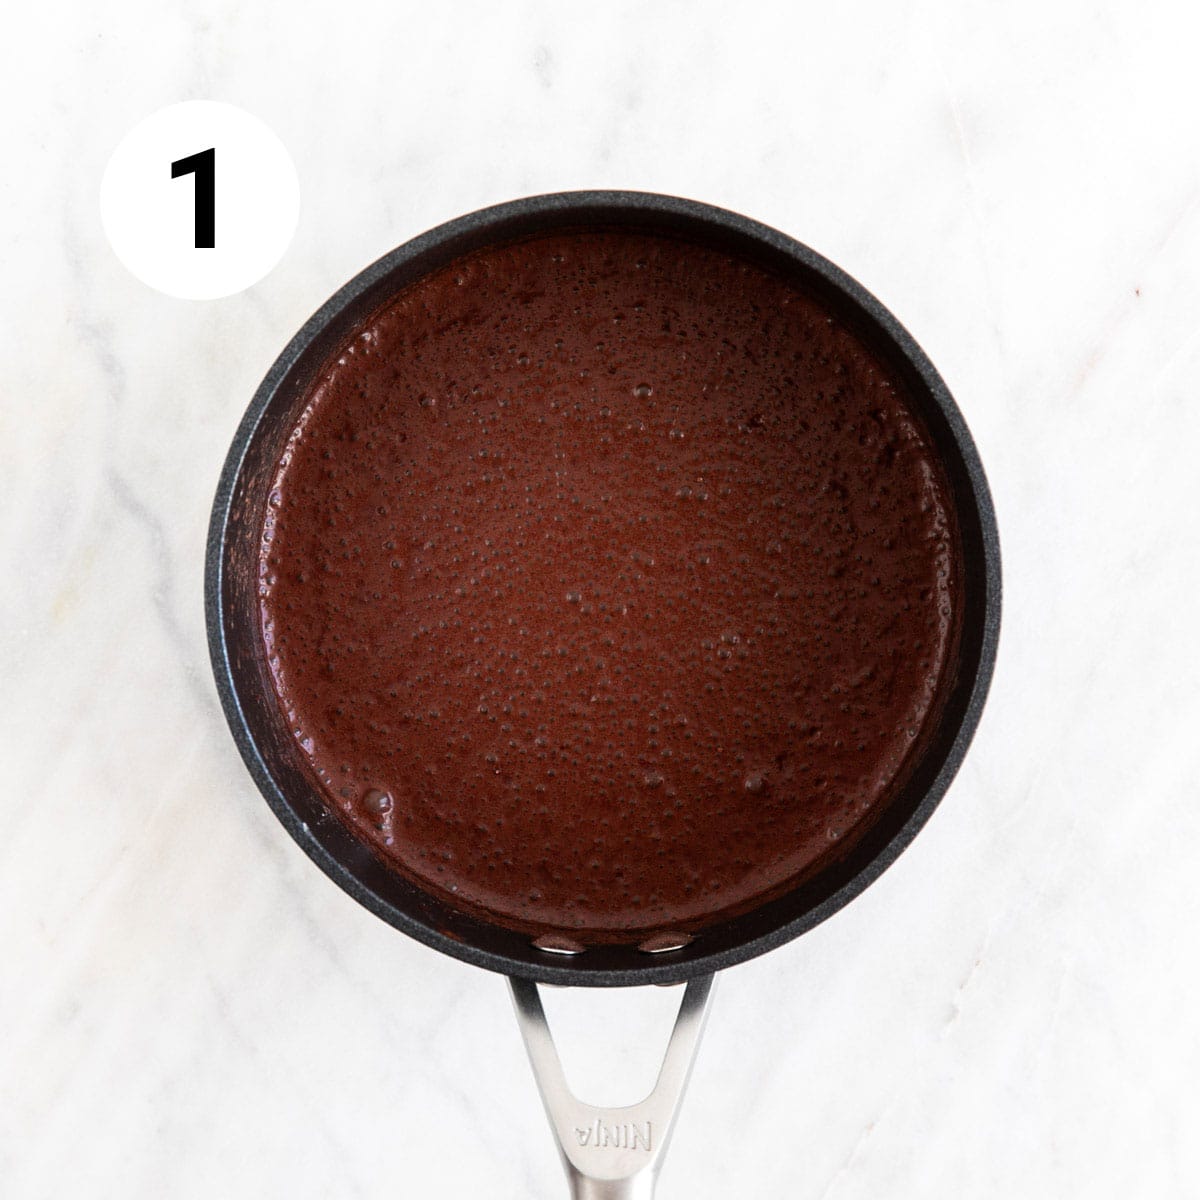 Vegan chocolate pudding ingredients mixed in a saucepan.